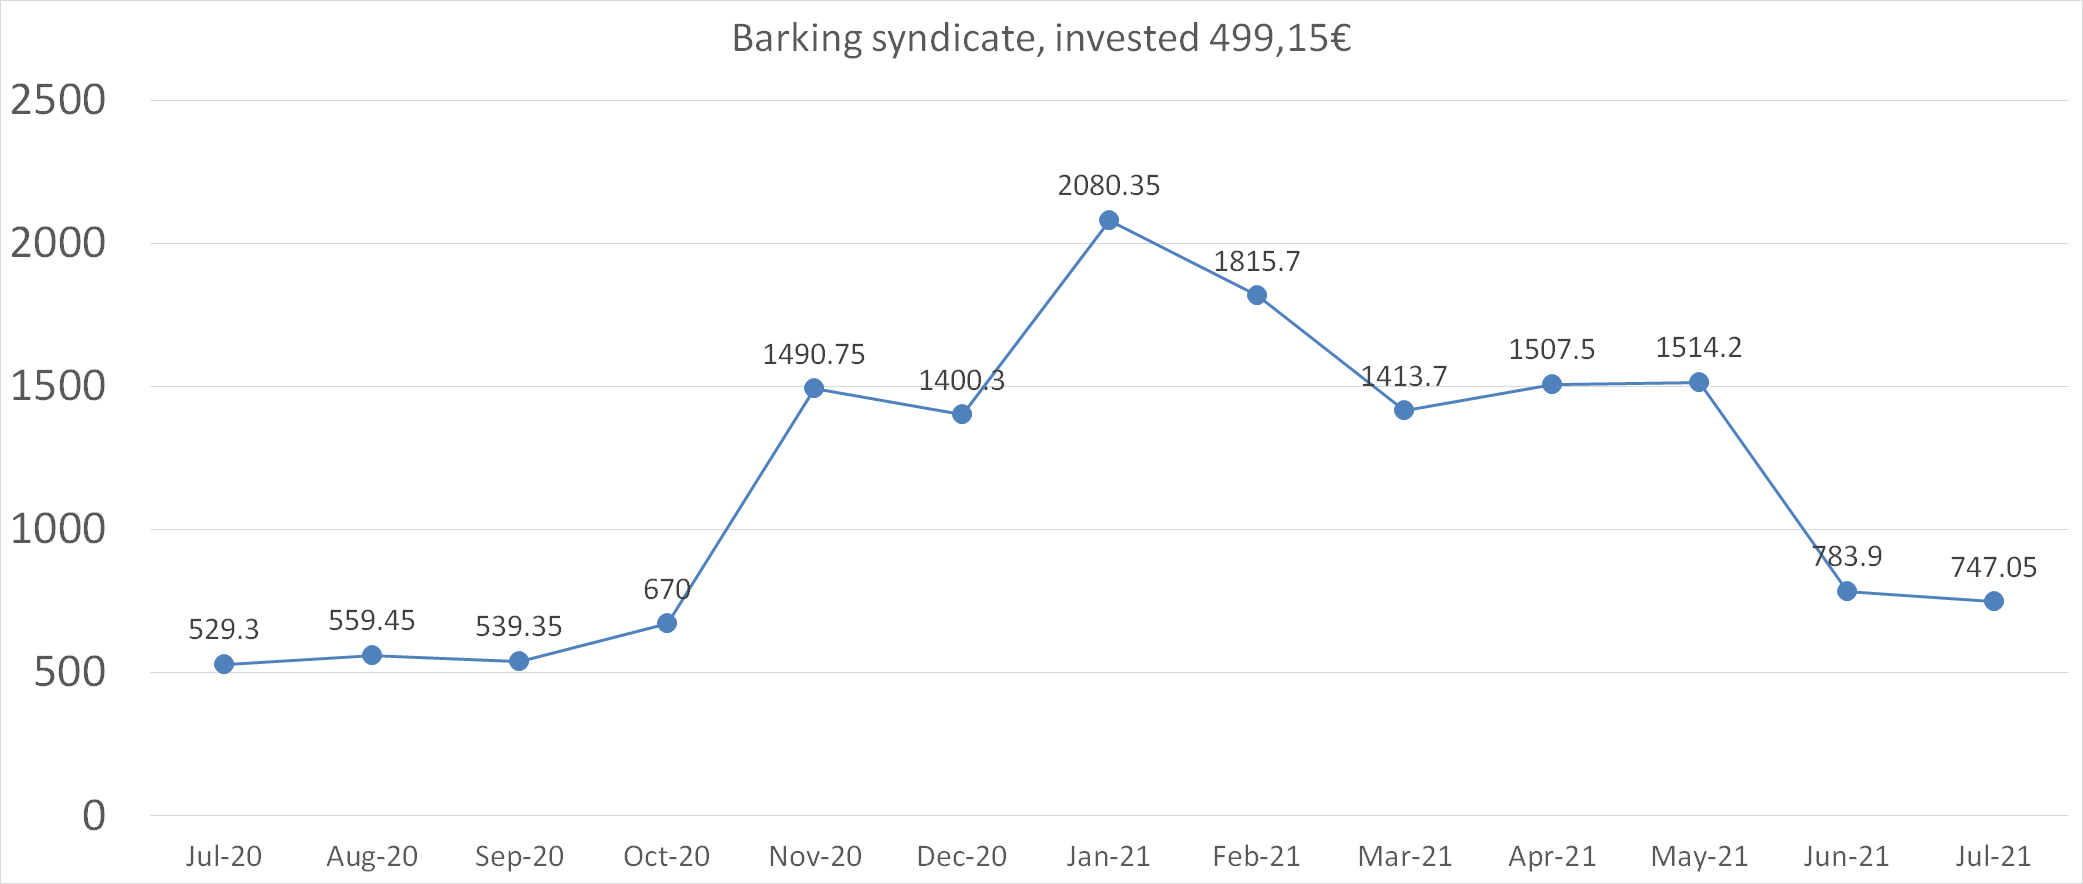 Barking syndicate worth july 2021